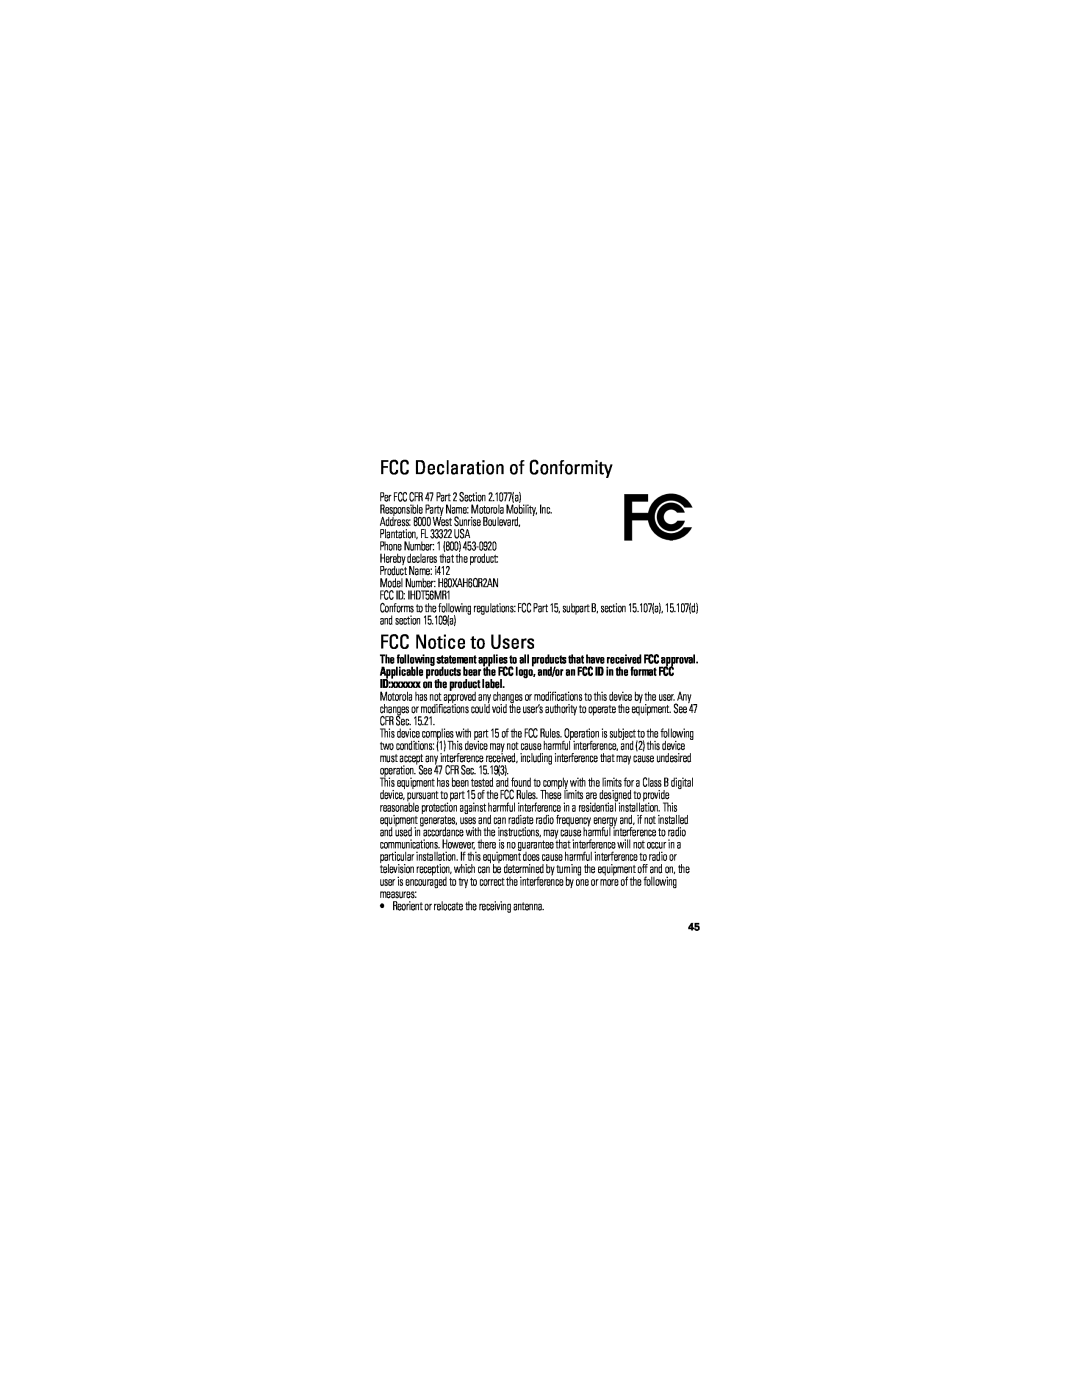 Motorola I412 manual FCC Declaration of Conformity, FCC Notice to Users, Model Number H80XAH6QR2AN FCC ID IHDT56MR1 